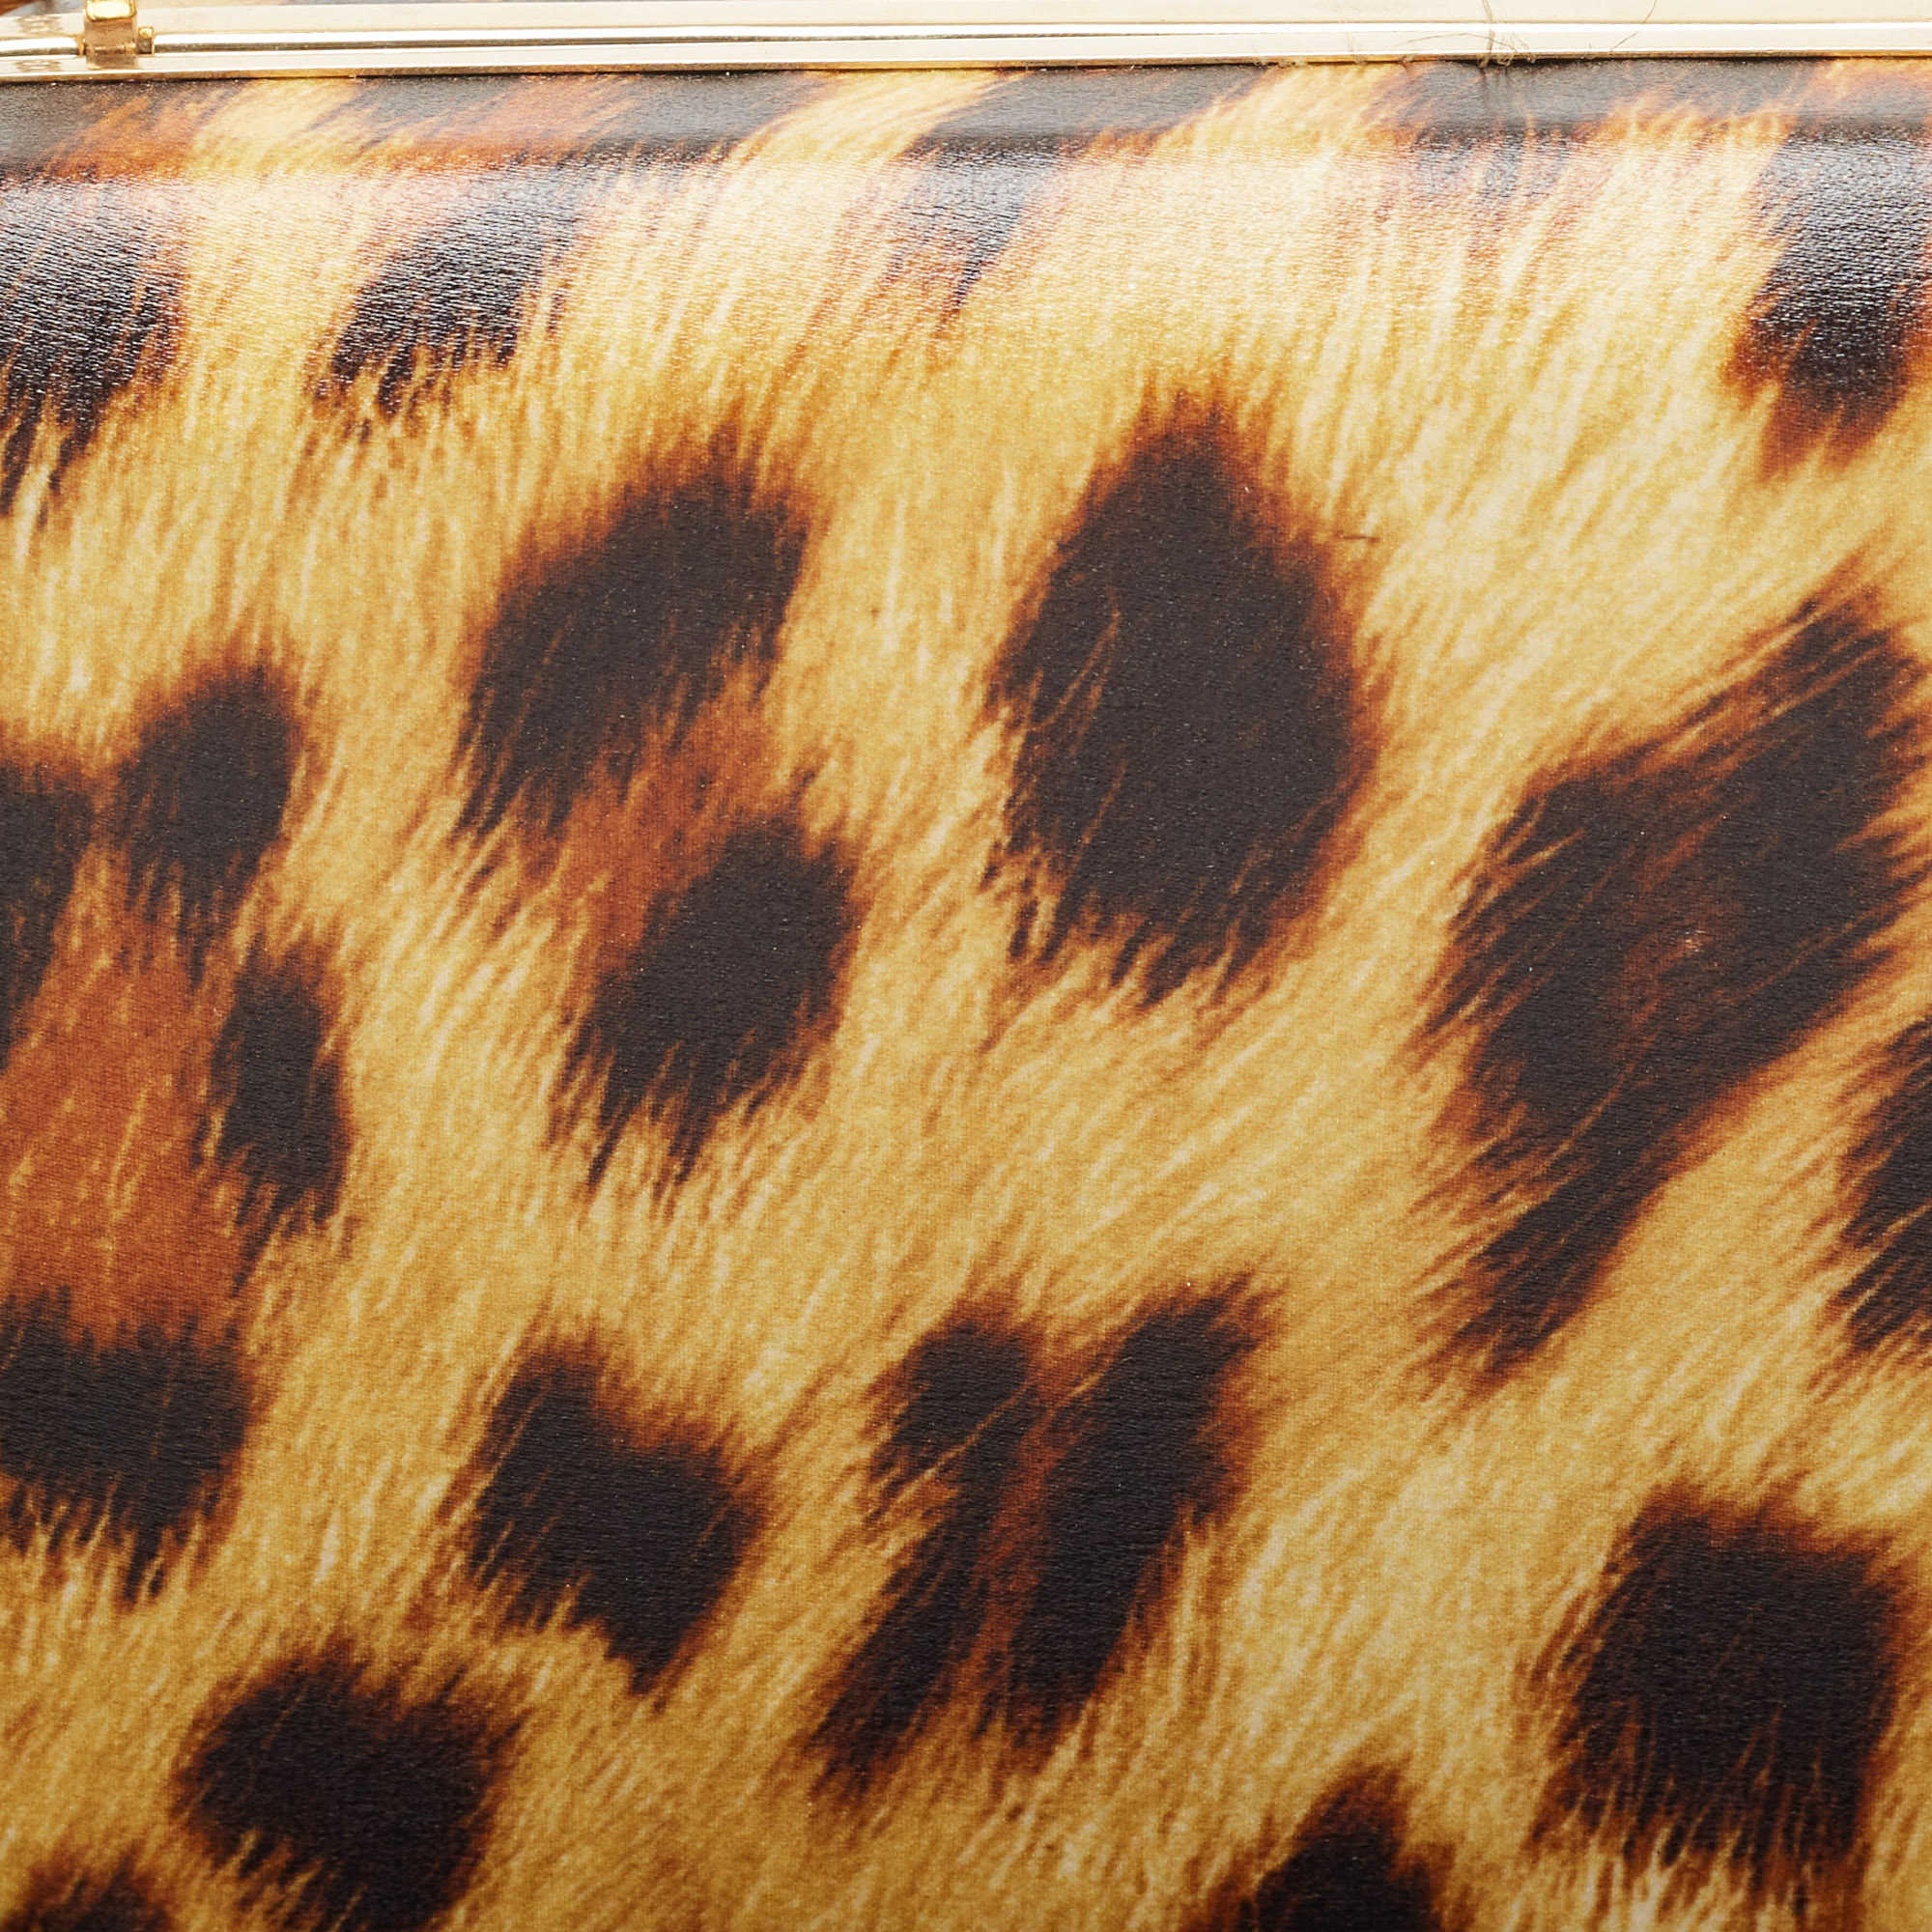 Roberto Cavalli Tan/Brown Leopard Print Leather Box Clutch